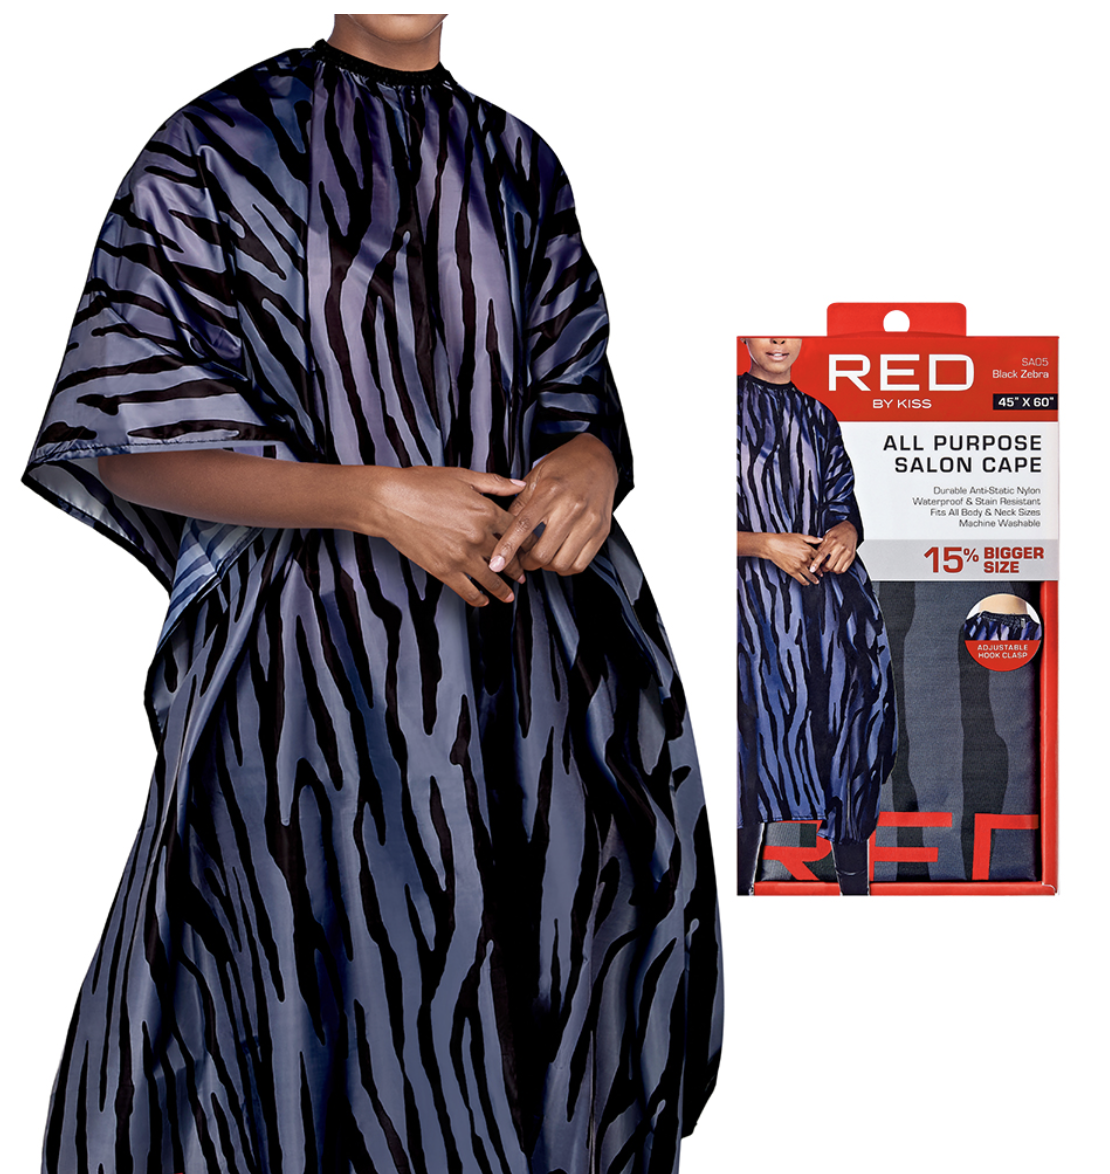 Red by Kiss Salon All Purpose Salon Cape Black, Zebra Nylon #SA05 - BPolished Beauty Supply